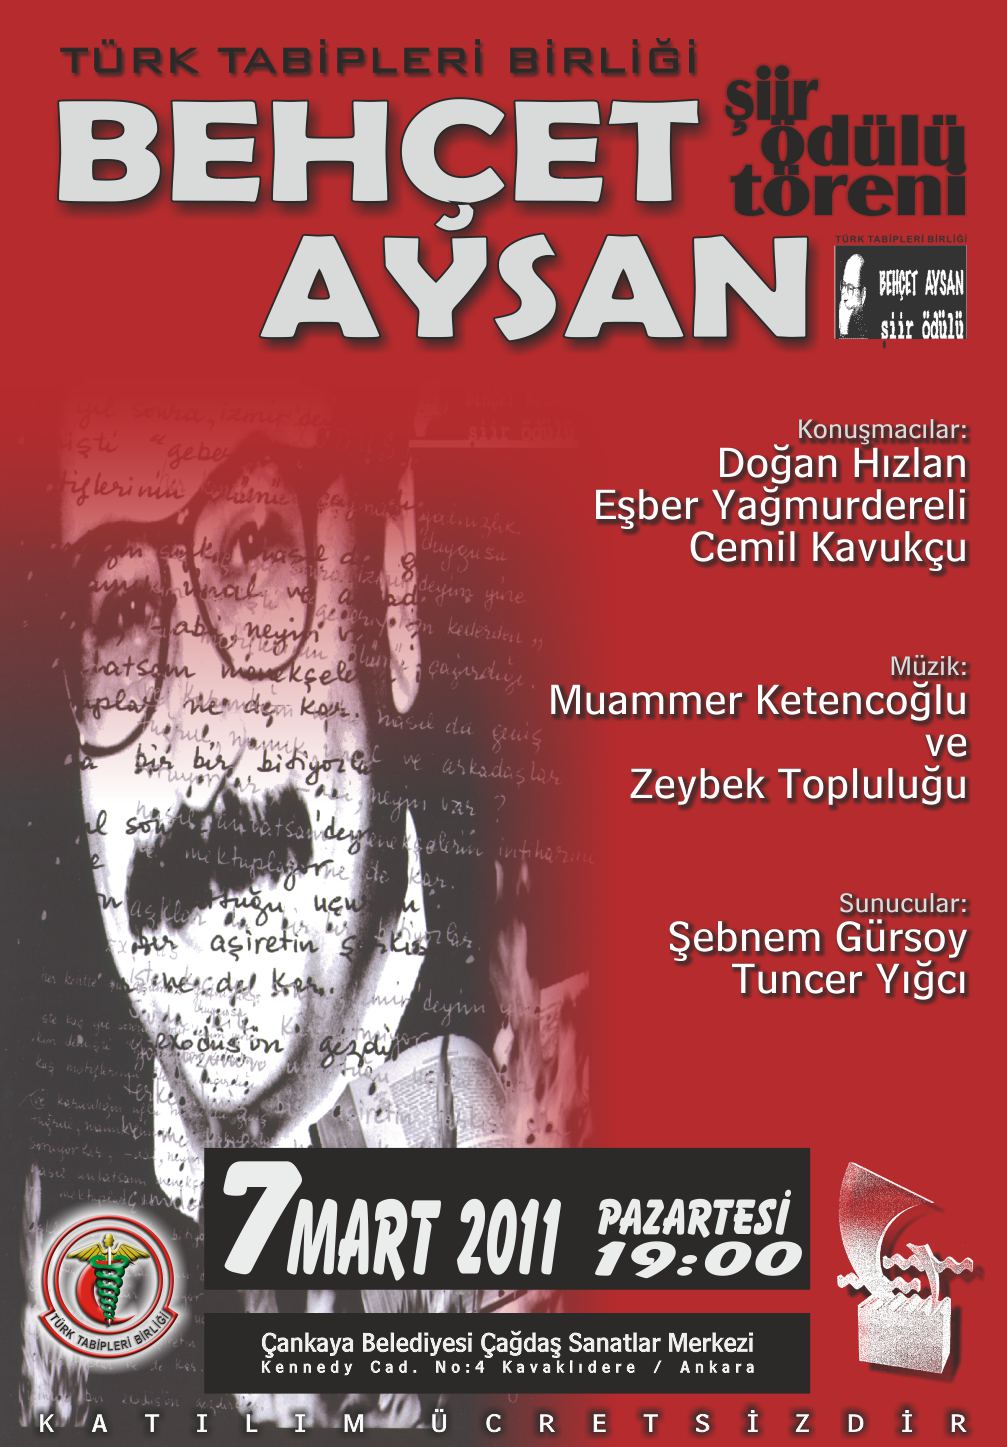 baysan2011_b